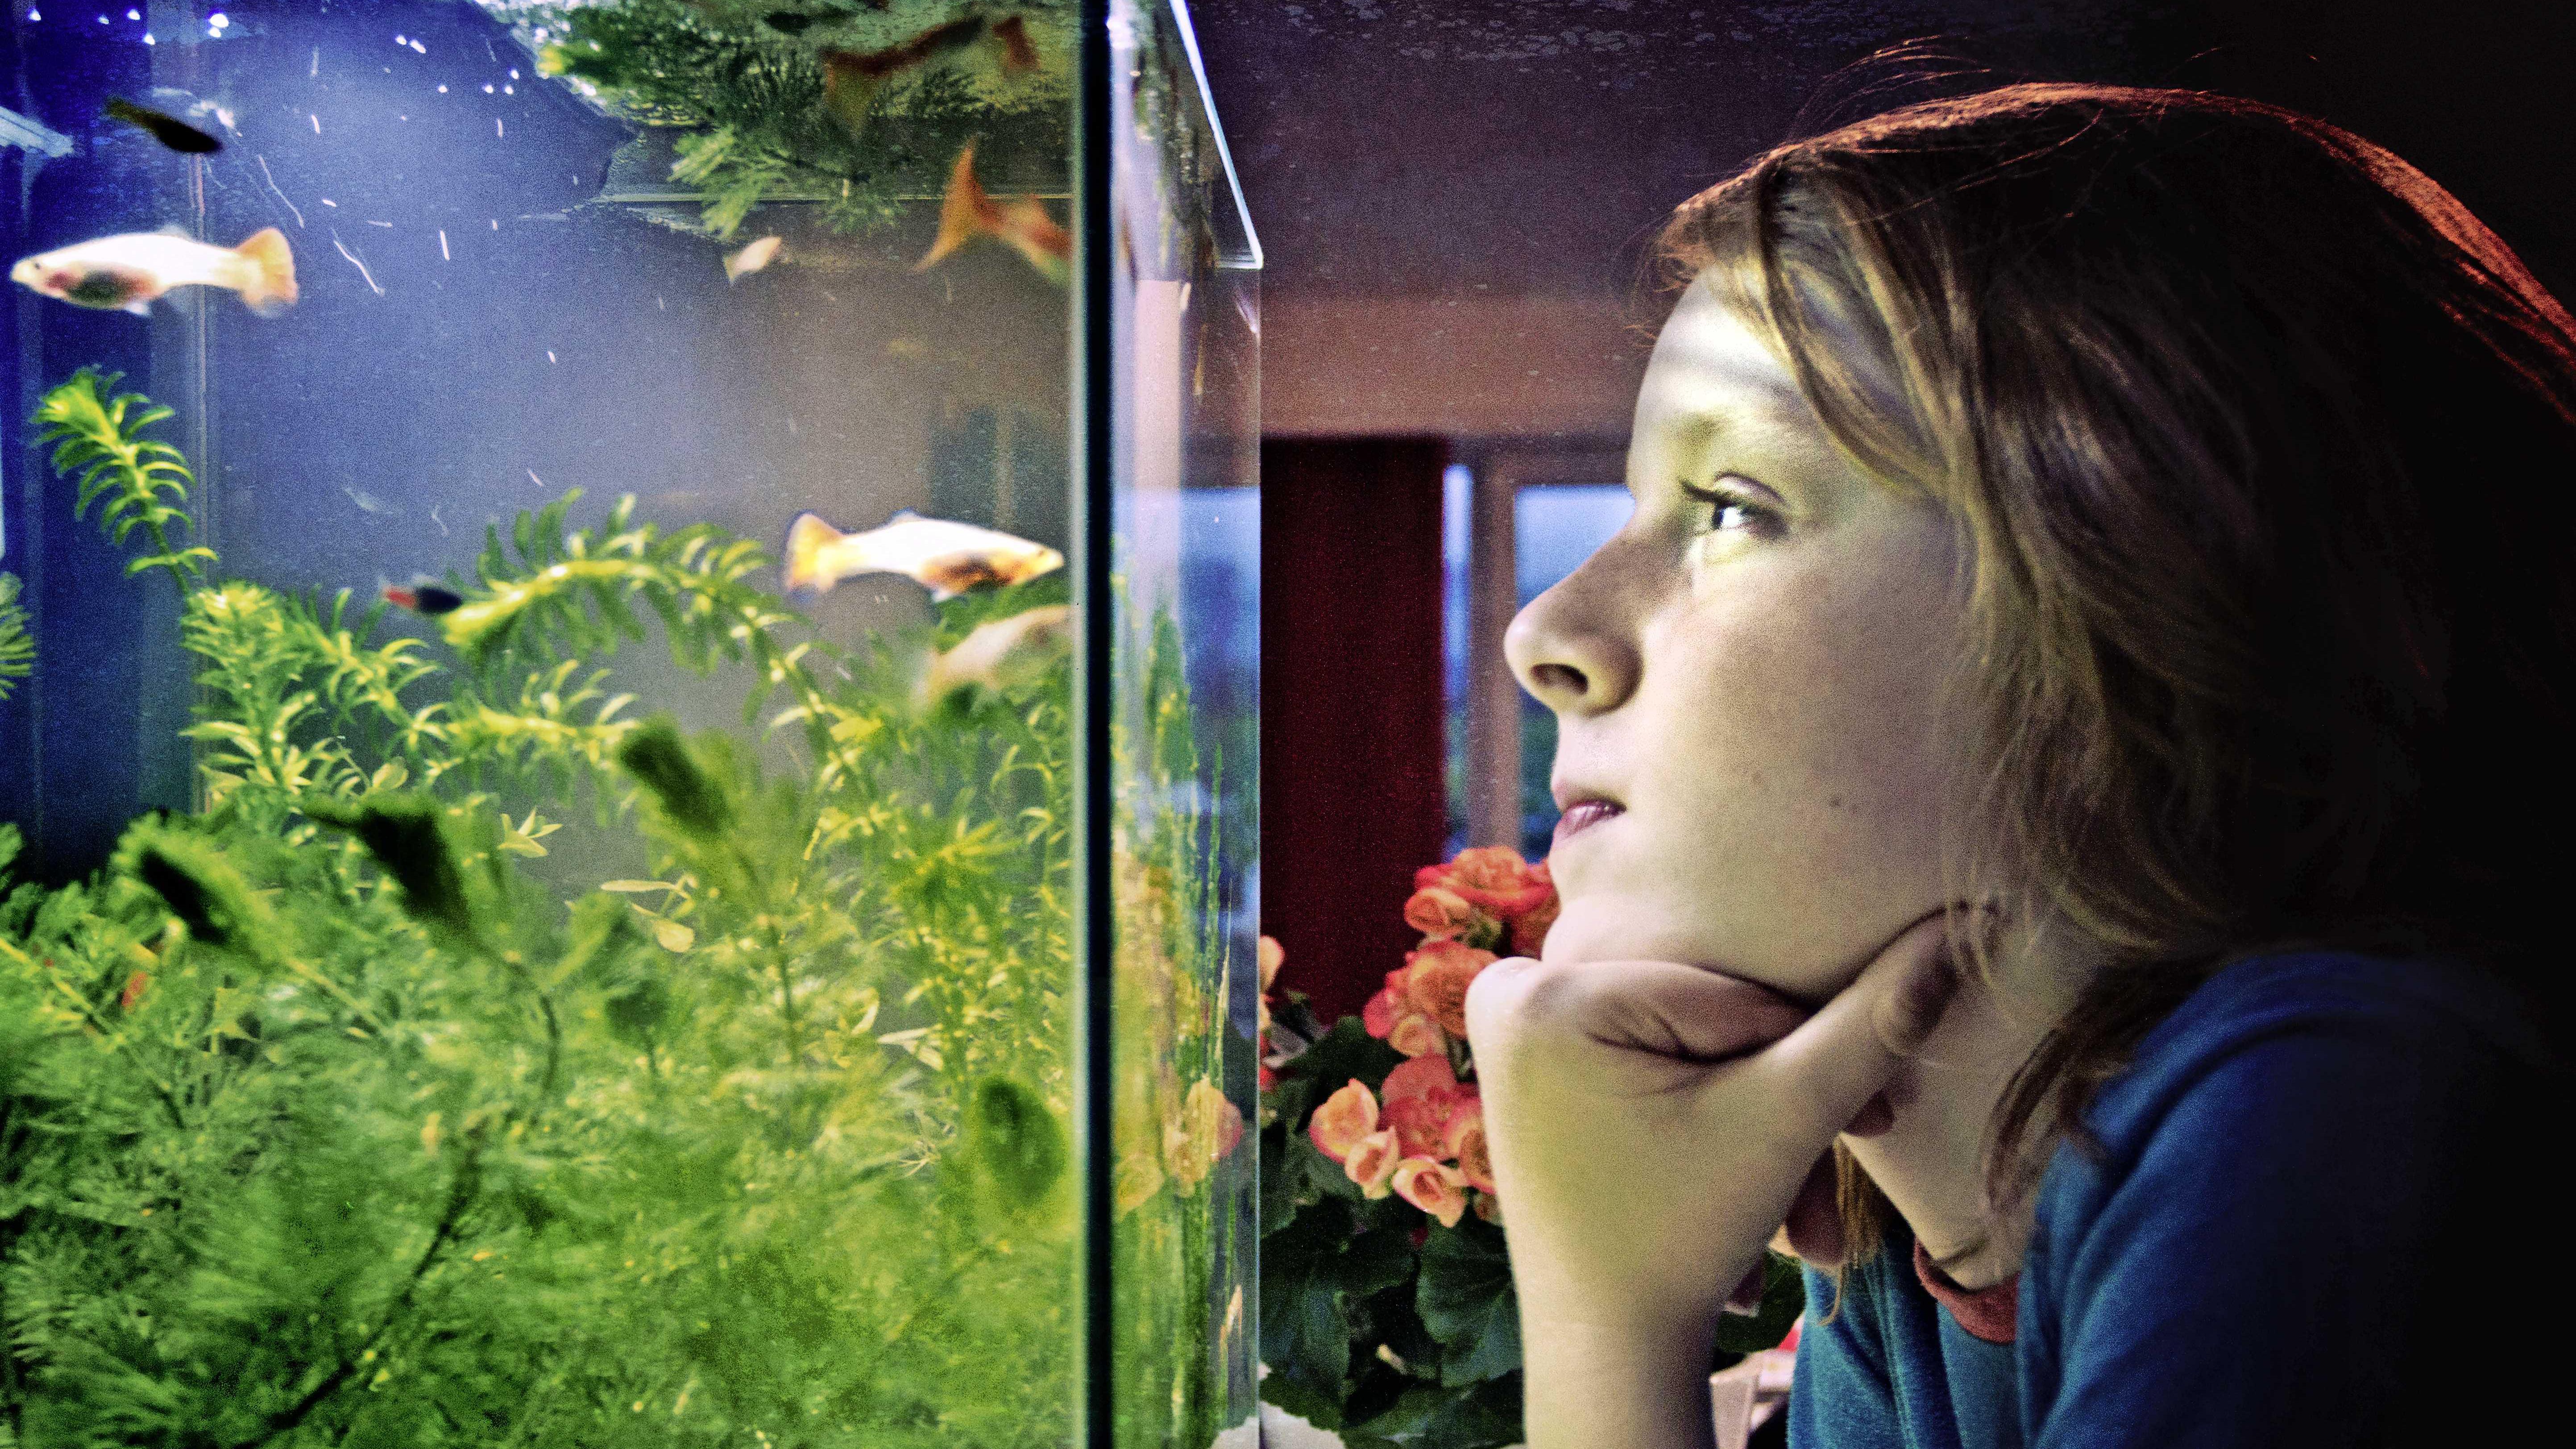 Холодная вода в аквариуме. Аквариум (Fish Tank) 2009. Человек в аквариуме. Фотосессия с рыбкой в аквариуме. Девушка в аквариуме.